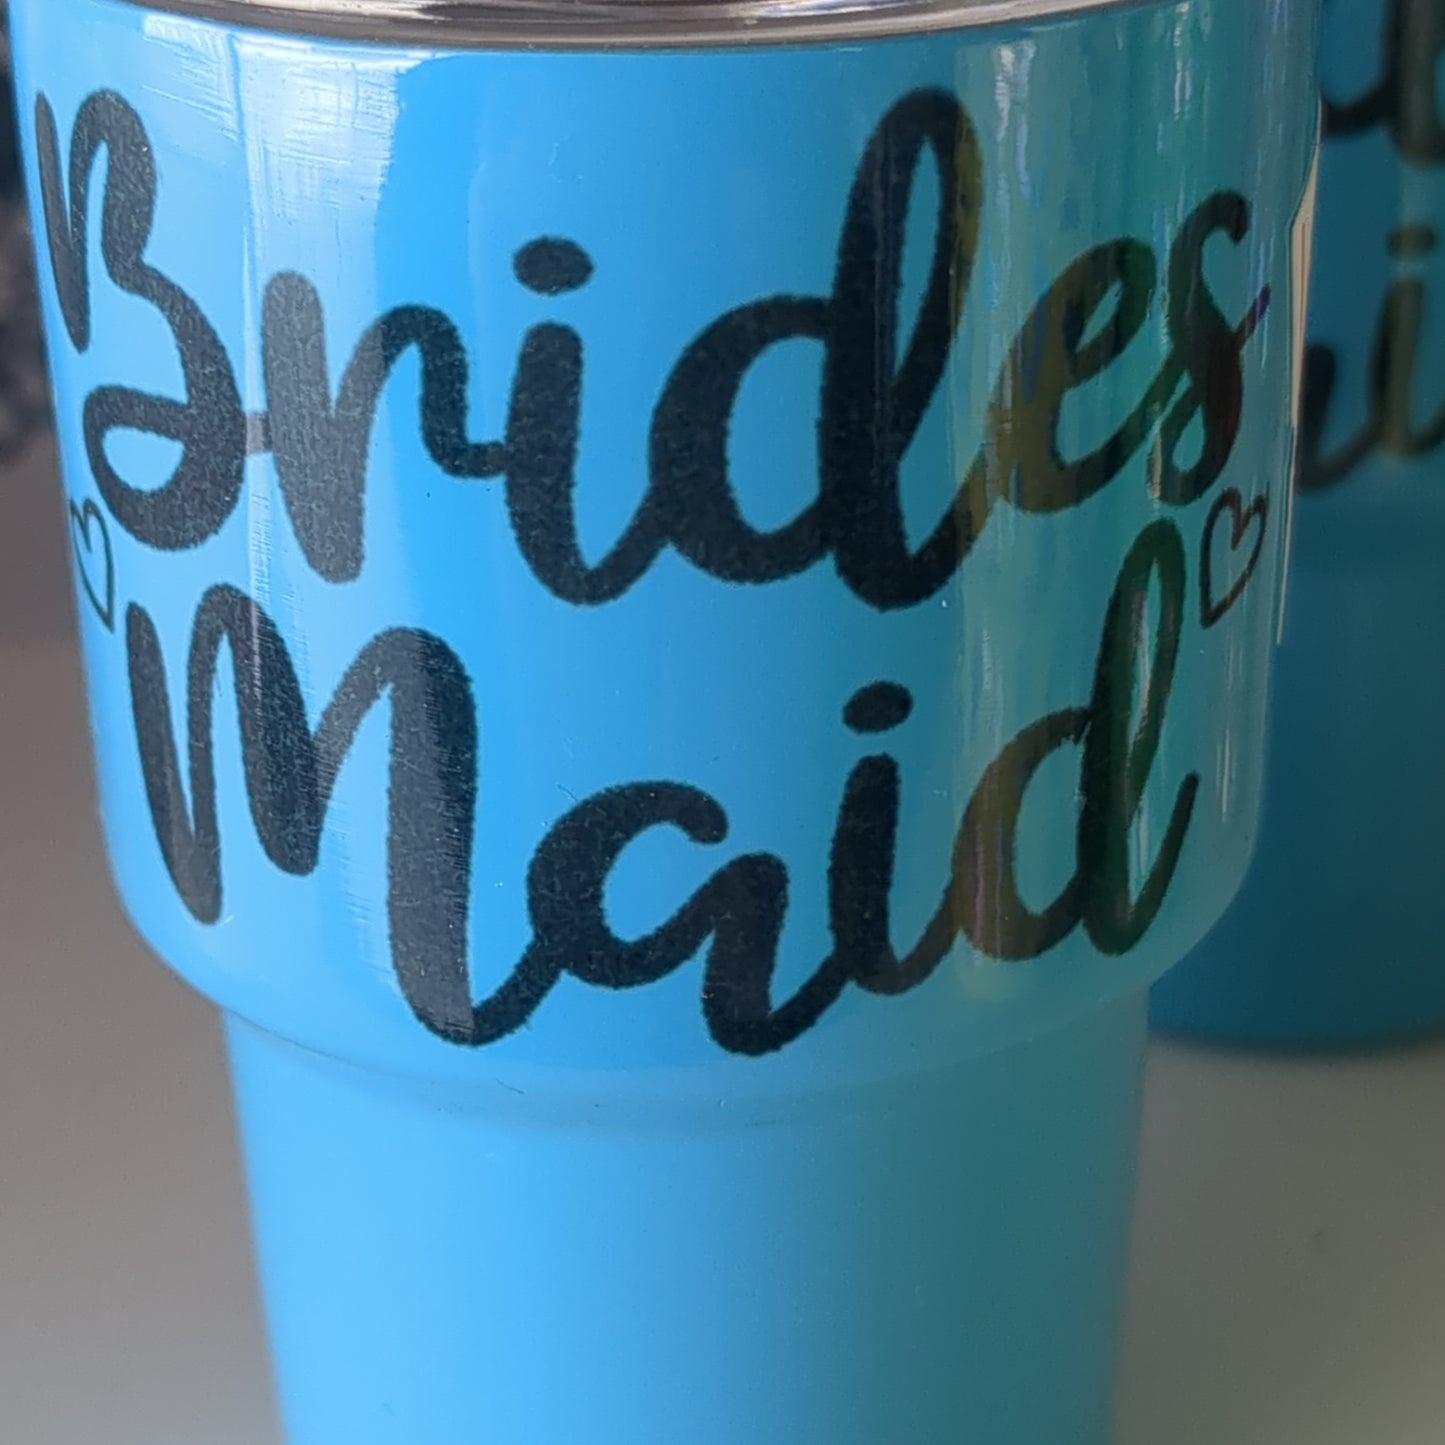 Shot glass / mini Tumbler medium blue says bridesmaid